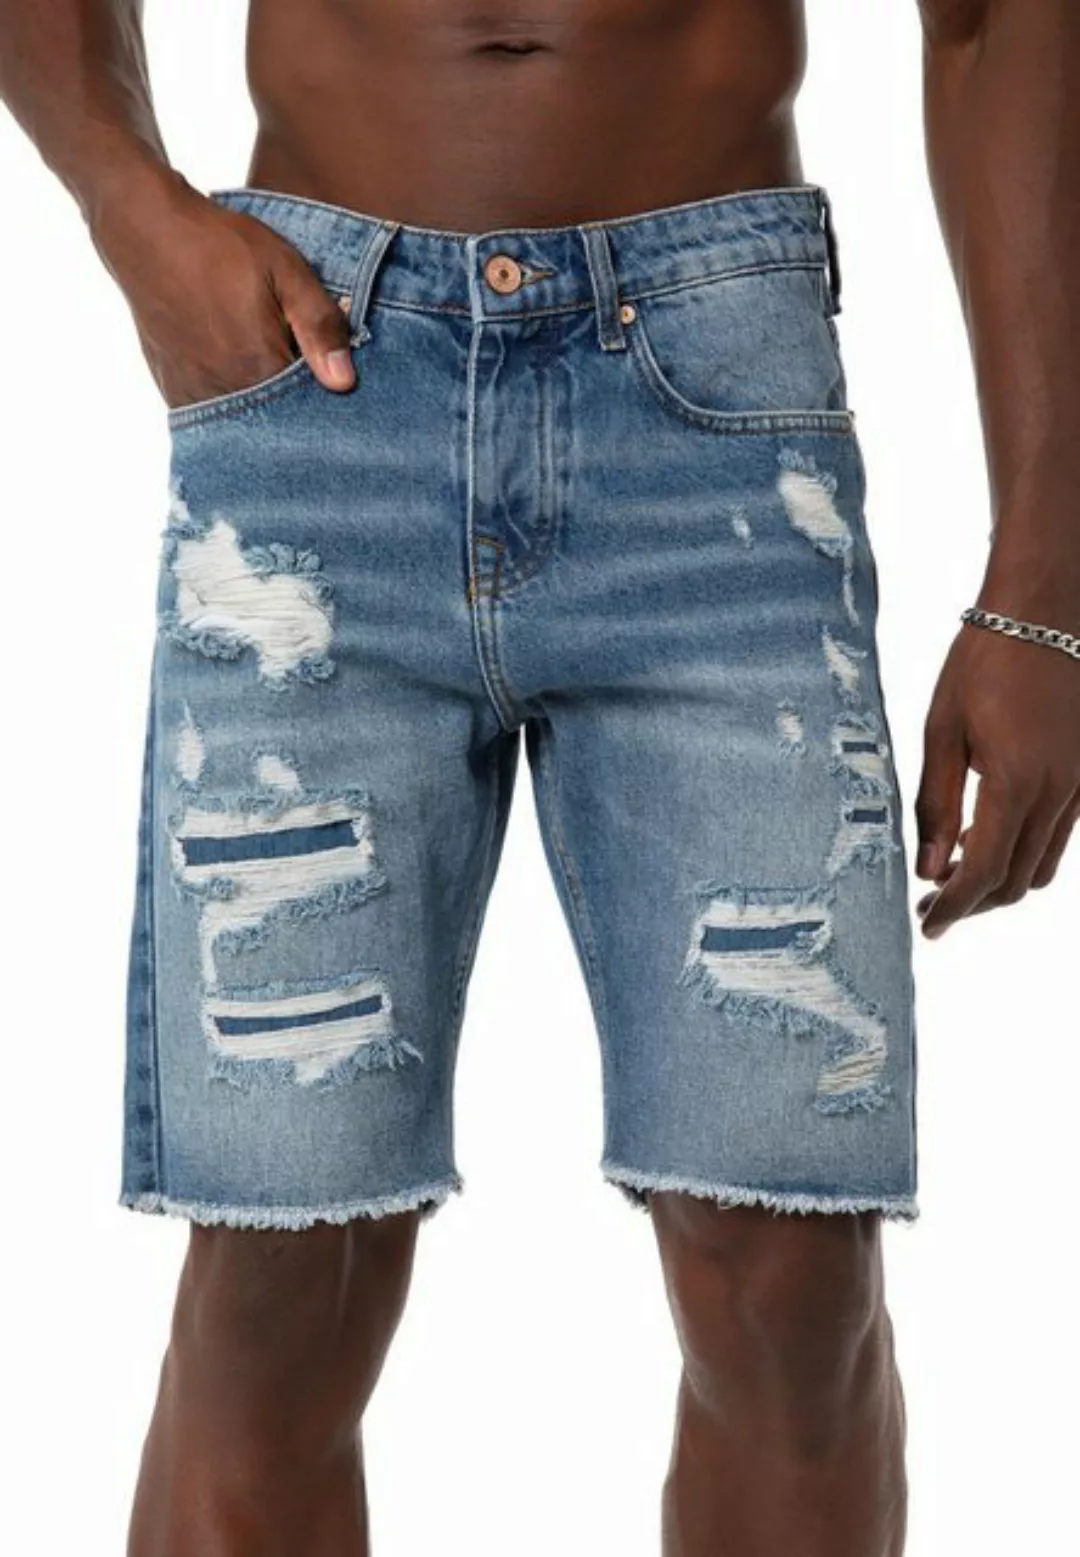 RedBridge Jeansshorts Red Bridge Herren Shorts Kurze Hose Jeanshose fetzige günstig online kaufen